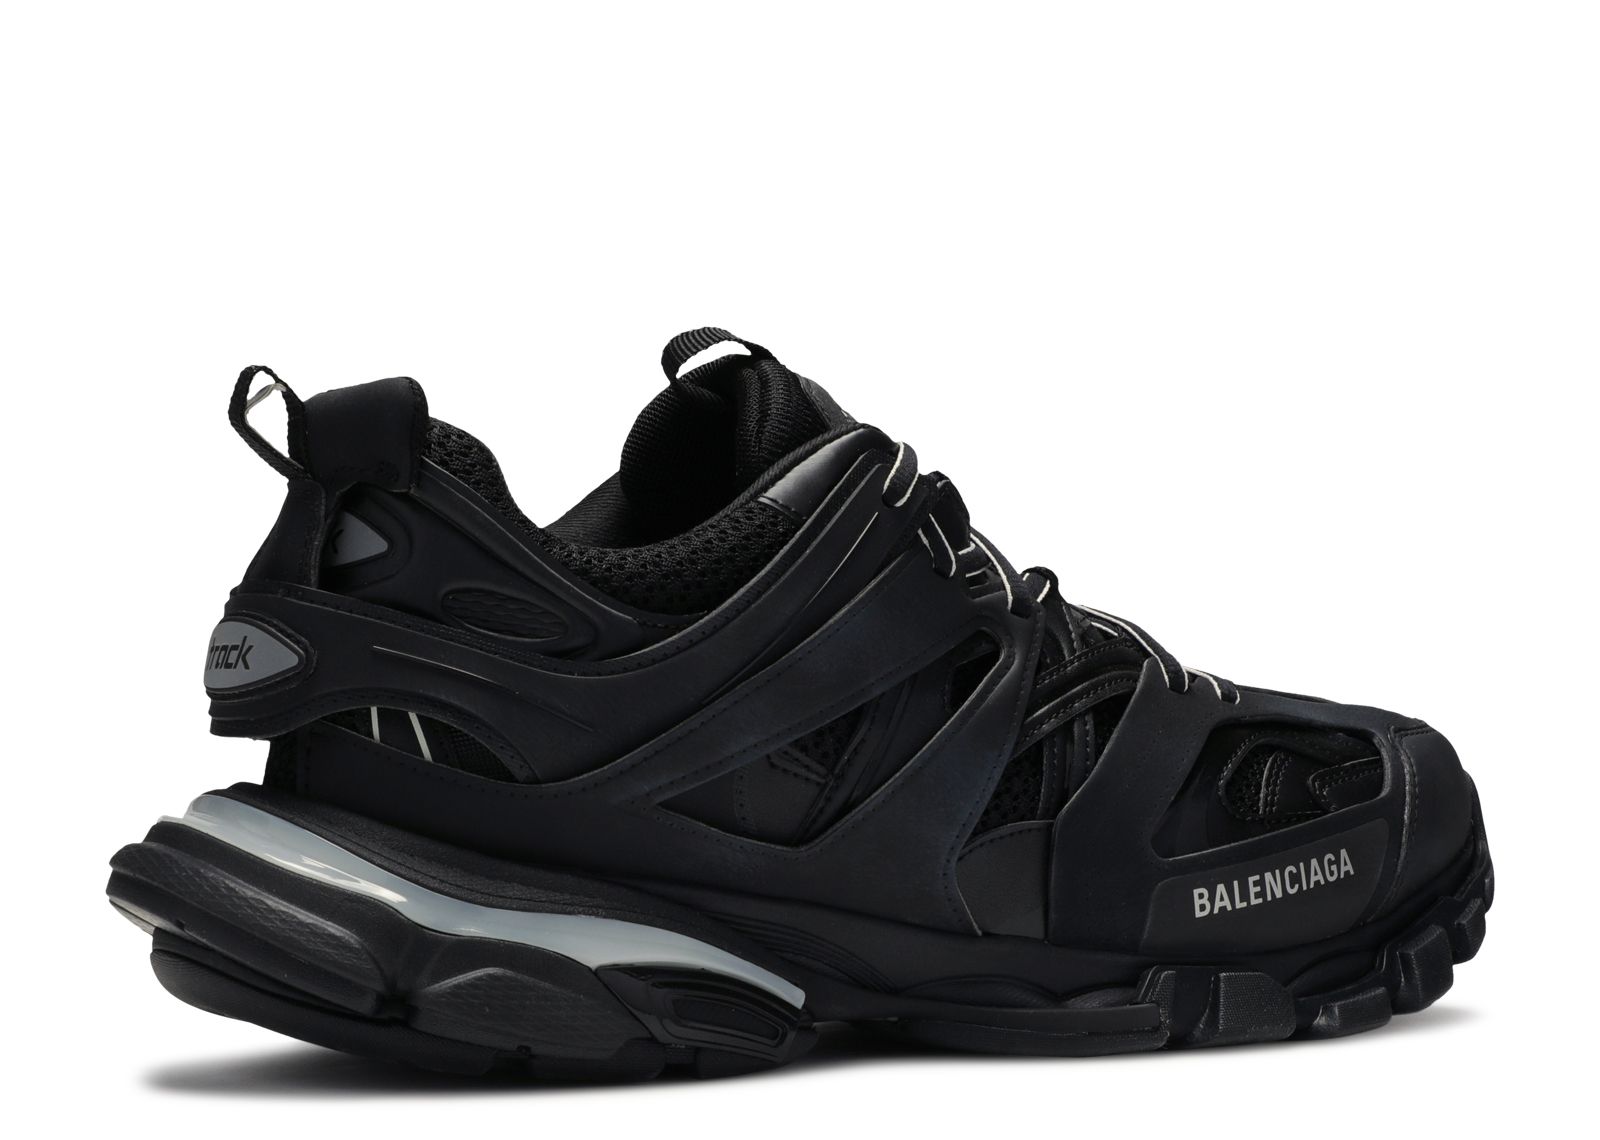 2019çš„Balenciaga s TRACK Sneaker A Closer Look at